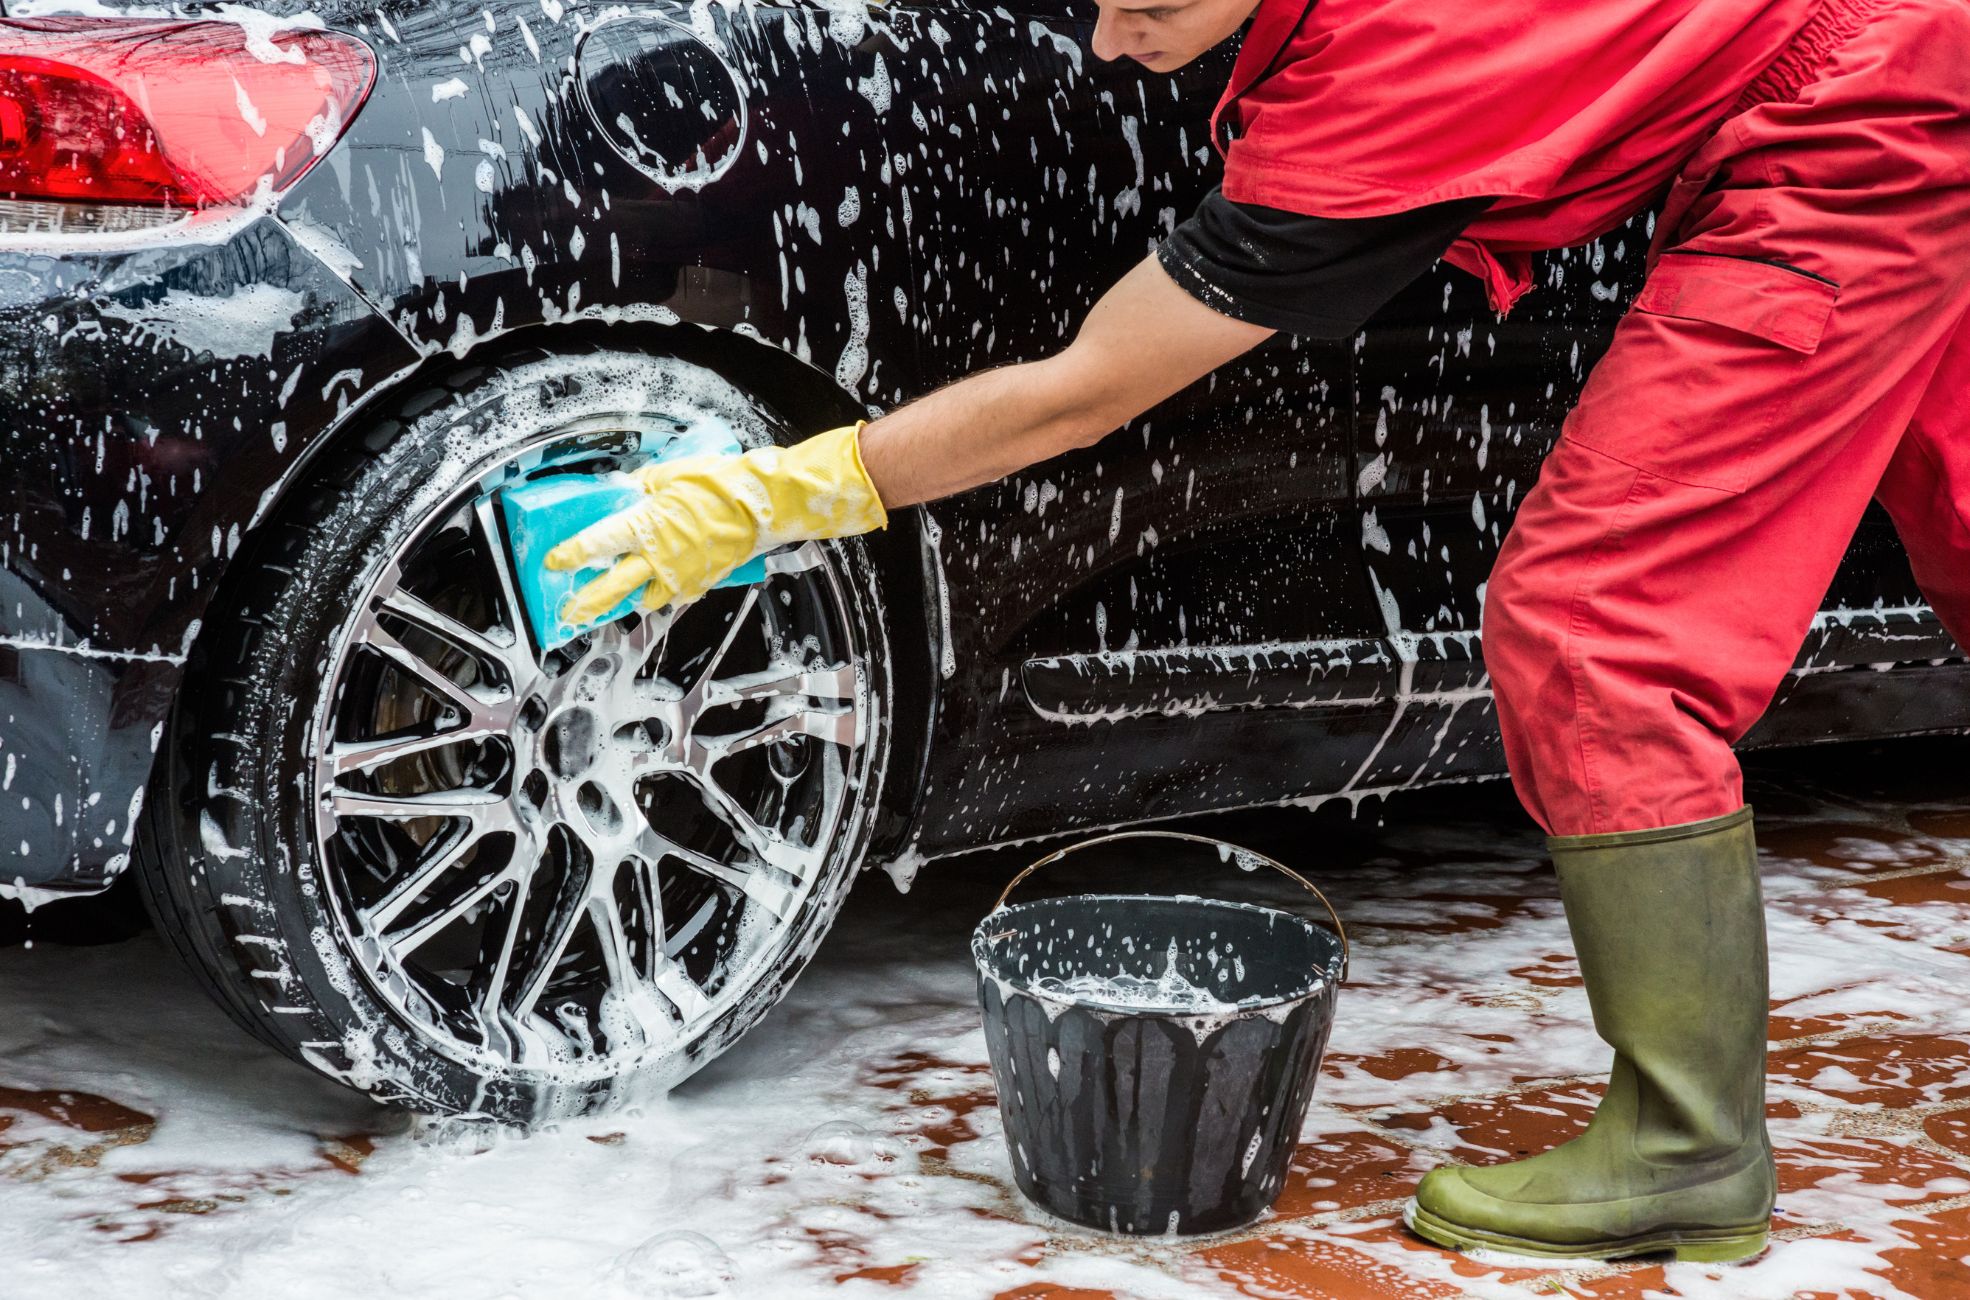 Stock image of man working at car wash